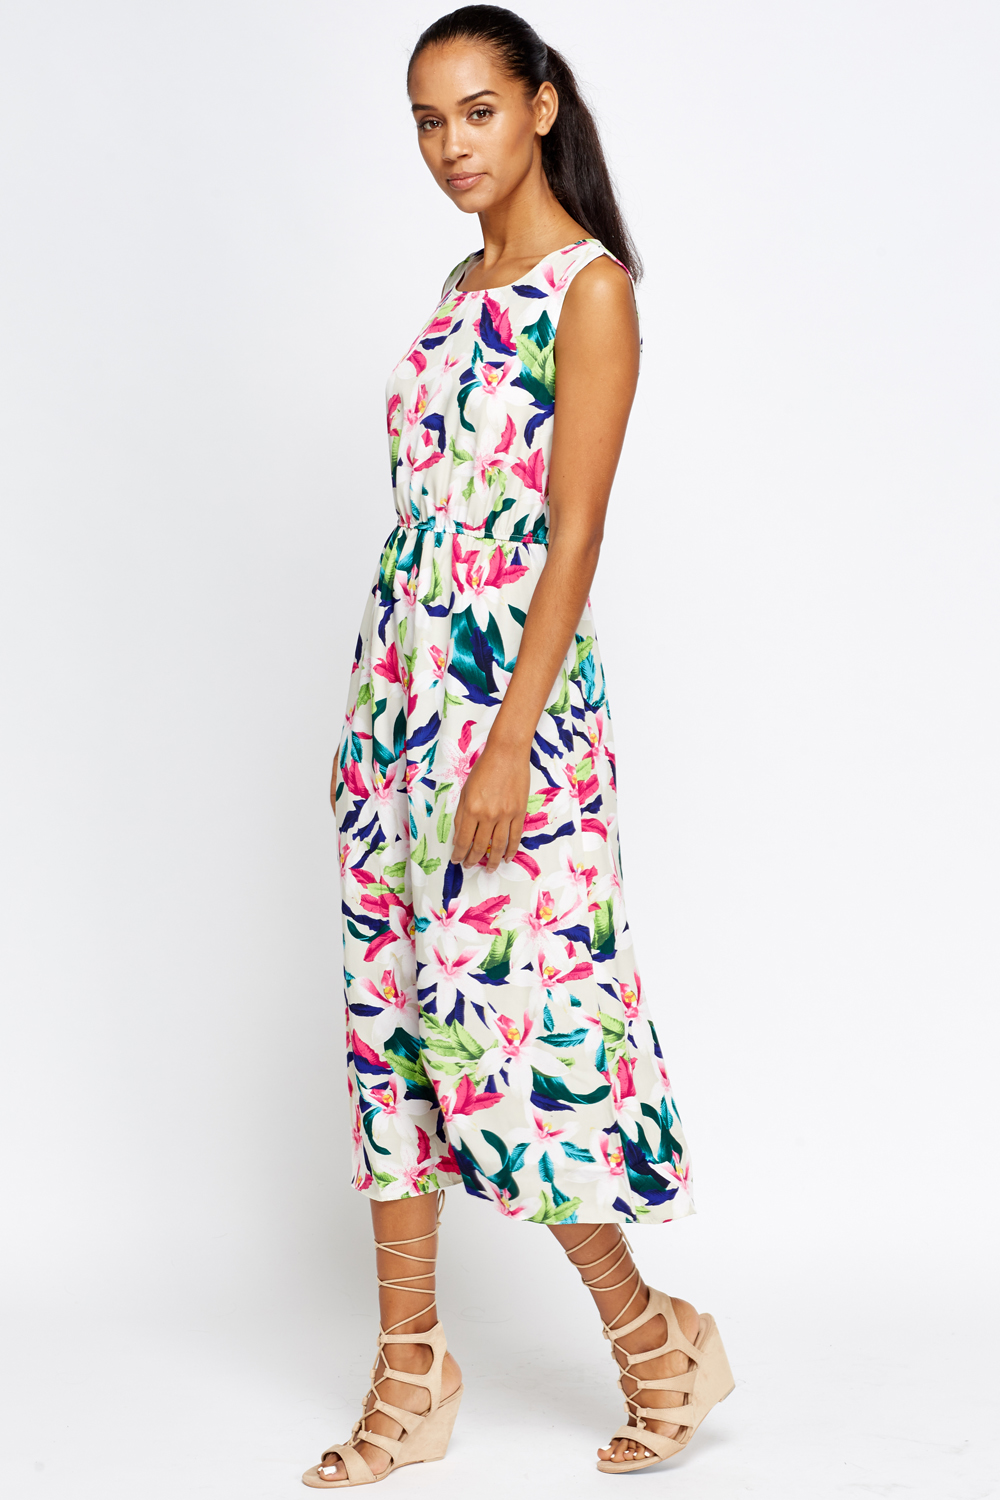 Floral Summer Midi Dress - Just $7